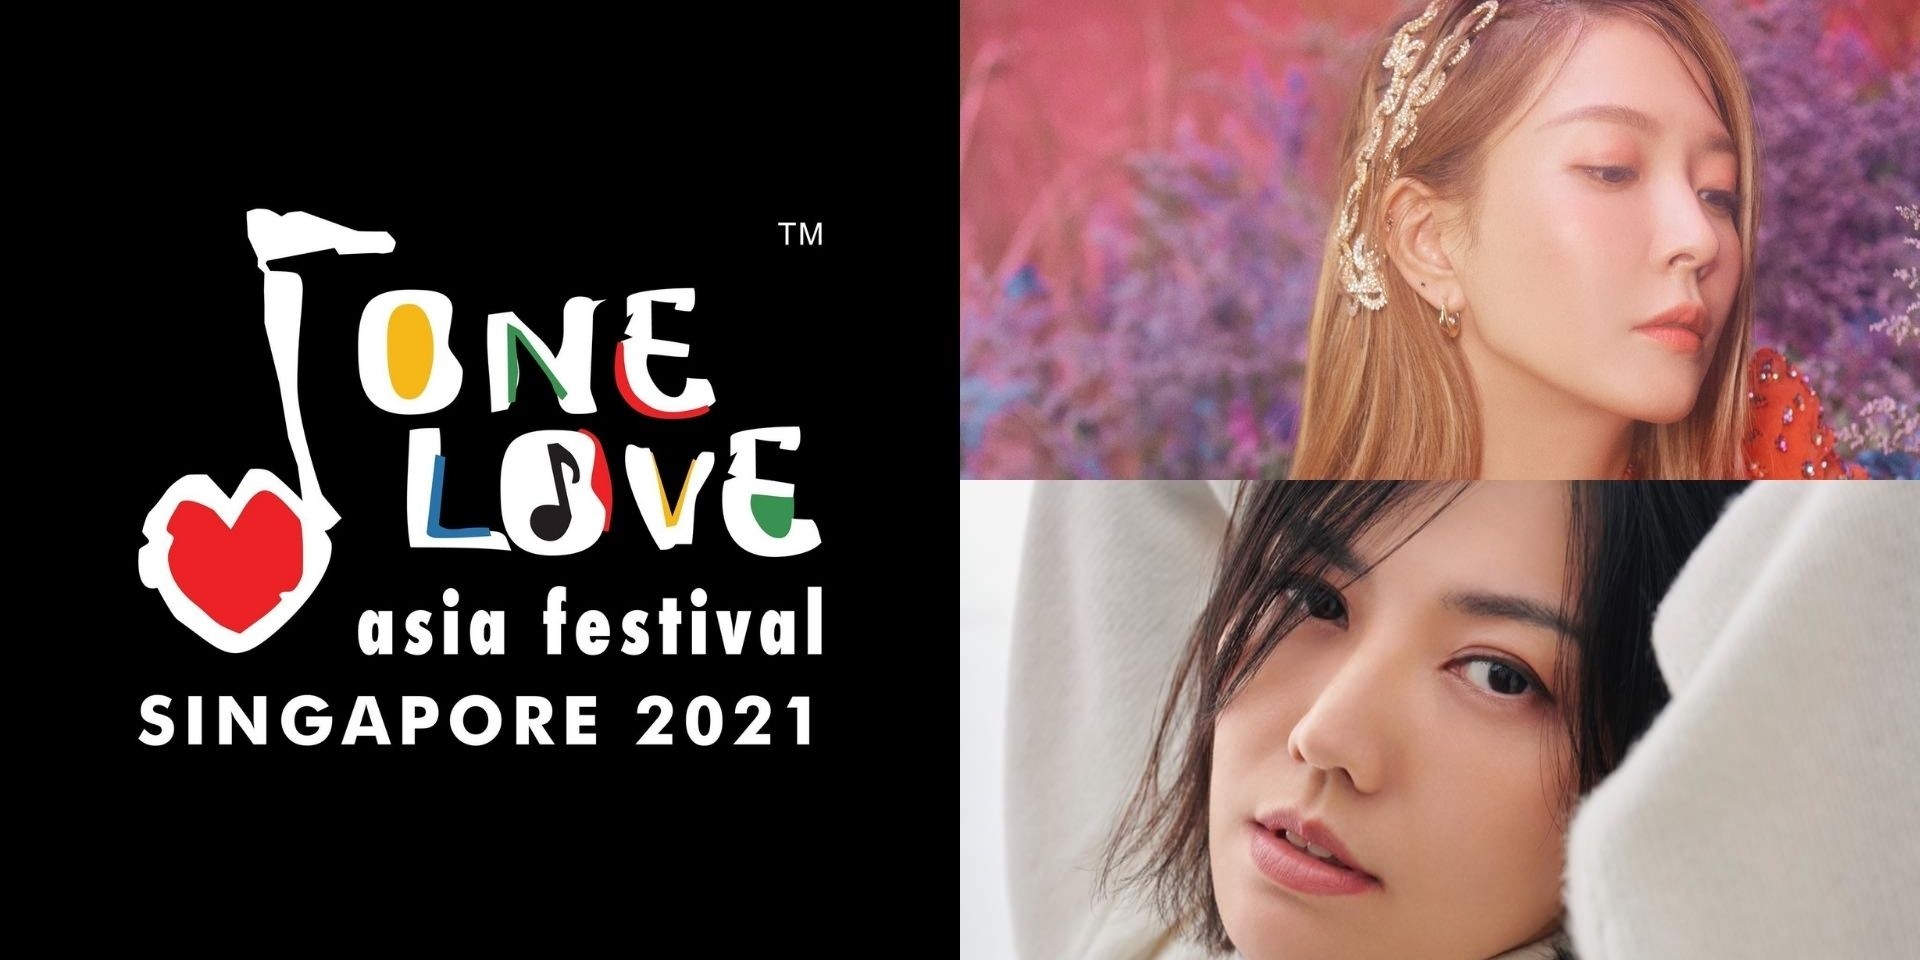 One Love Asia Festival 2021 featuring Stefanie Sun and BoA announces cancellation 
